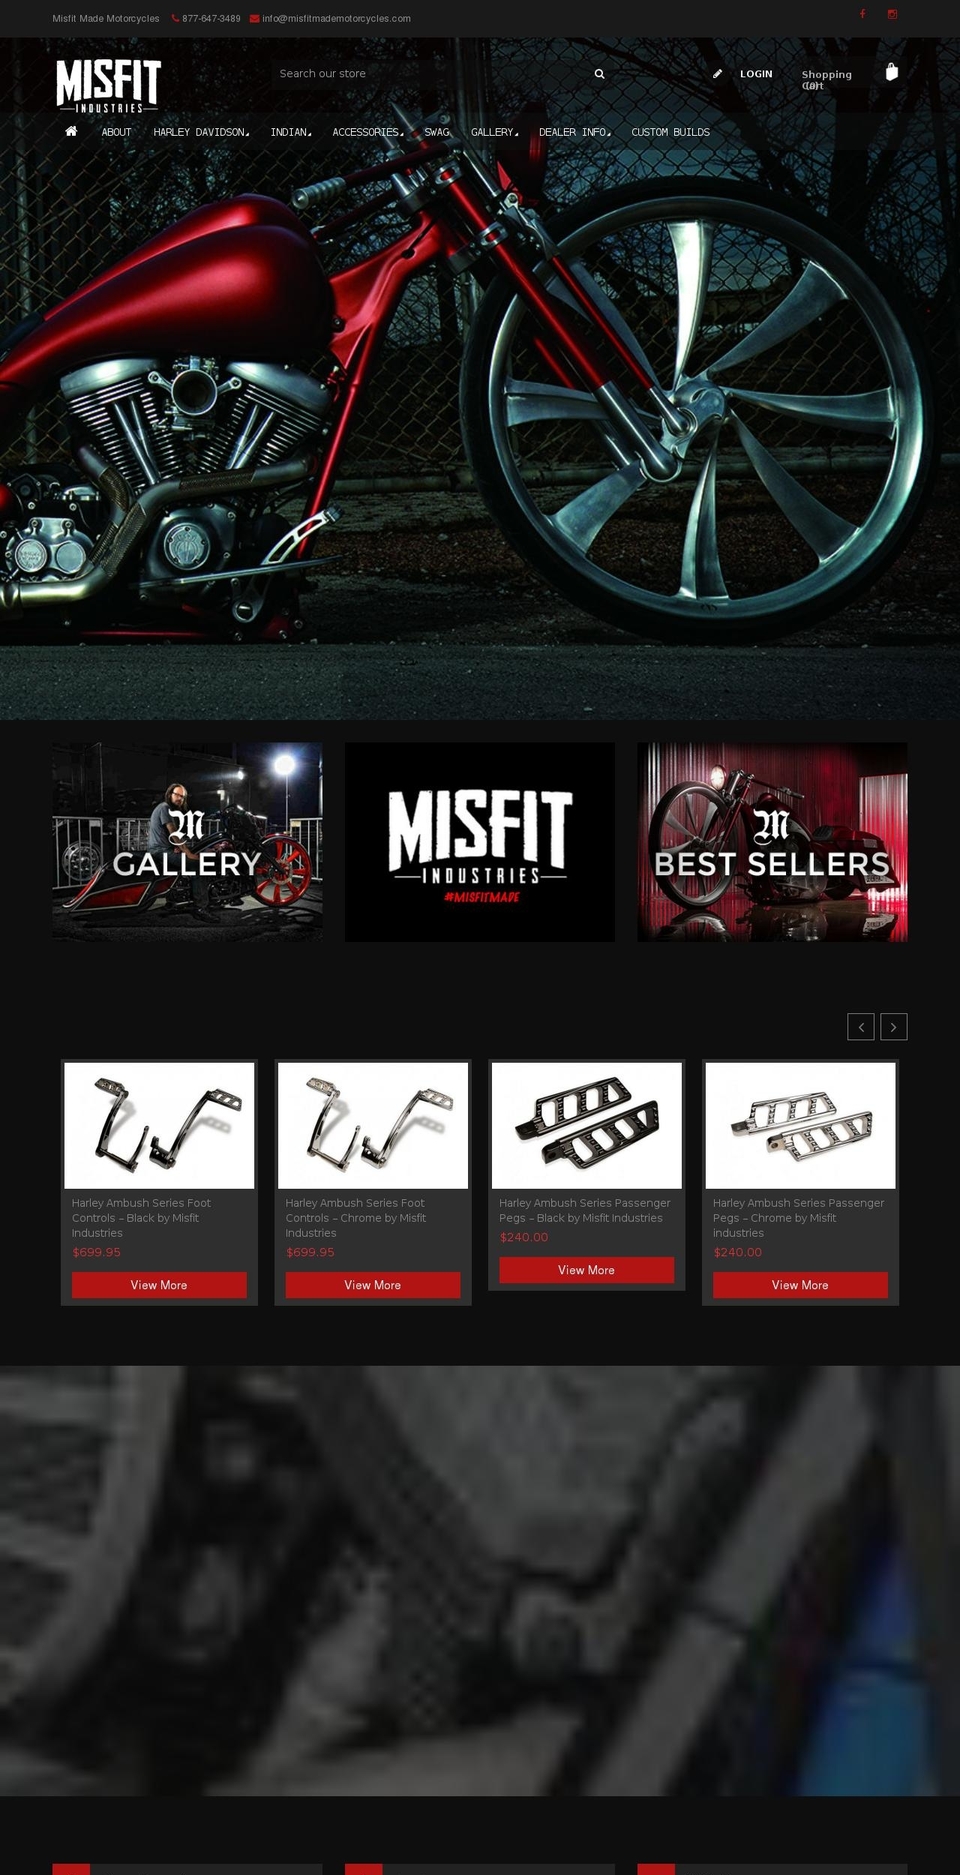 misfitindustries.org shopify website screenshot